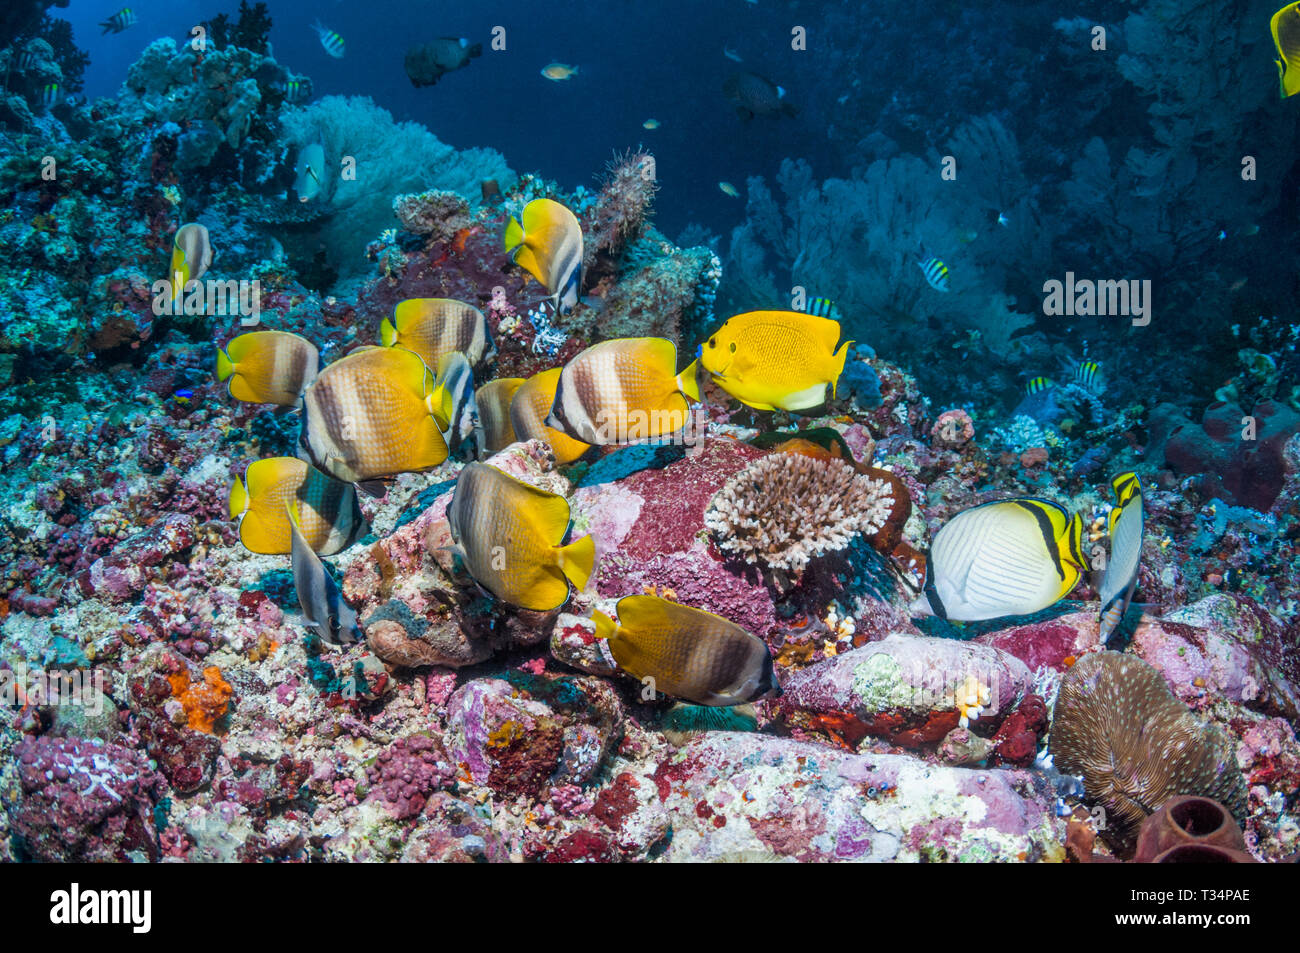 Klein's butterflyfish, a Vagabond butterflyfish [Chaetodon vagabundus] and a Three-spot angelfish [Apolemichthys trimaculatus] on coral reef.  Ambon,  Stock Photo